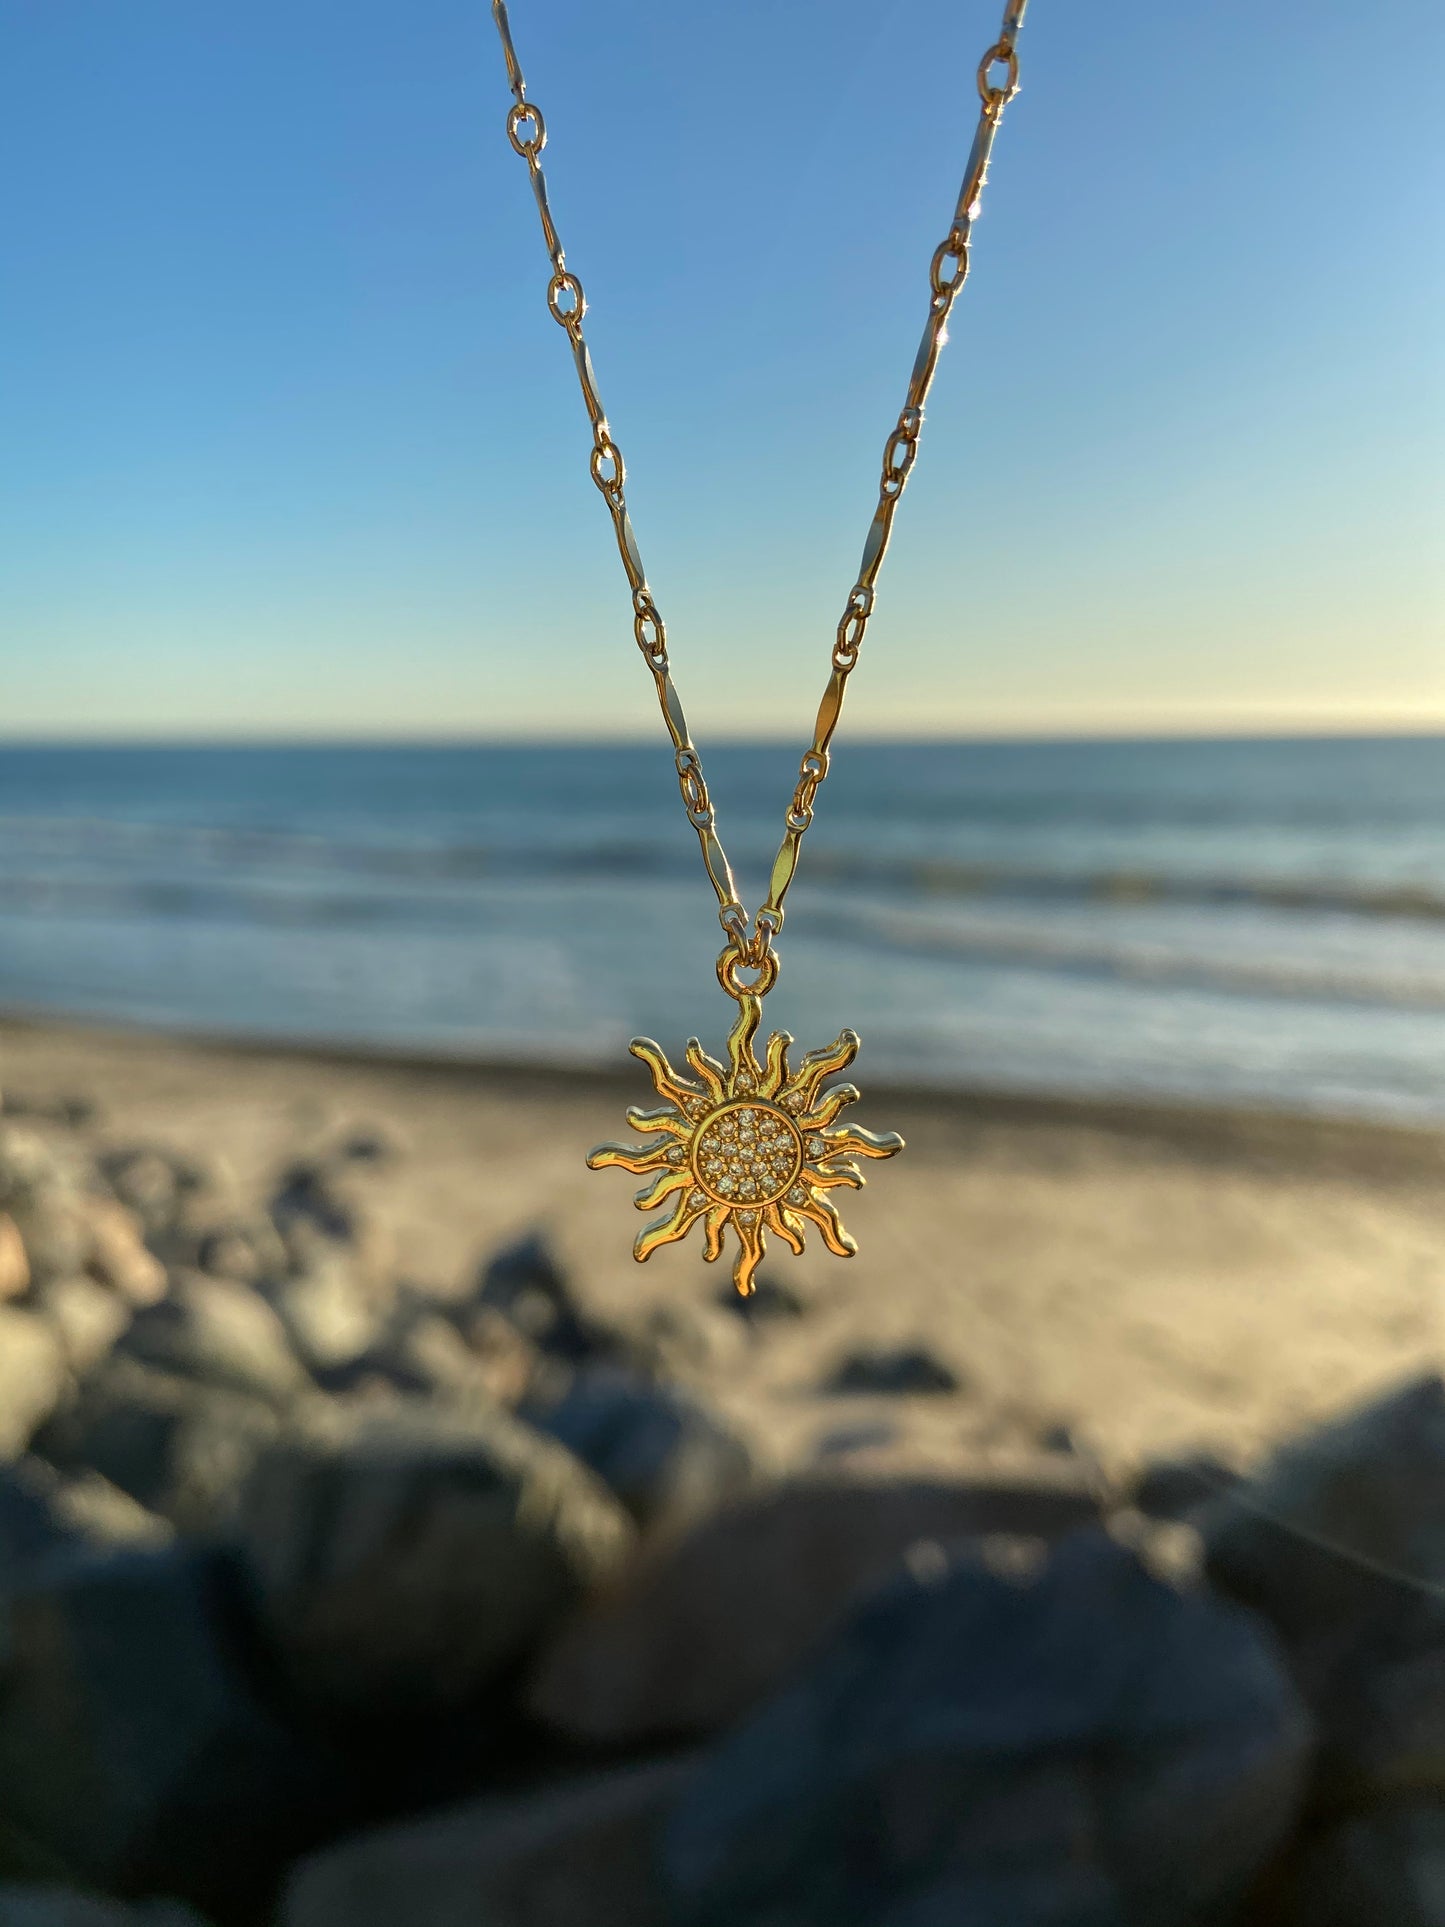 The Sunshine Necklace